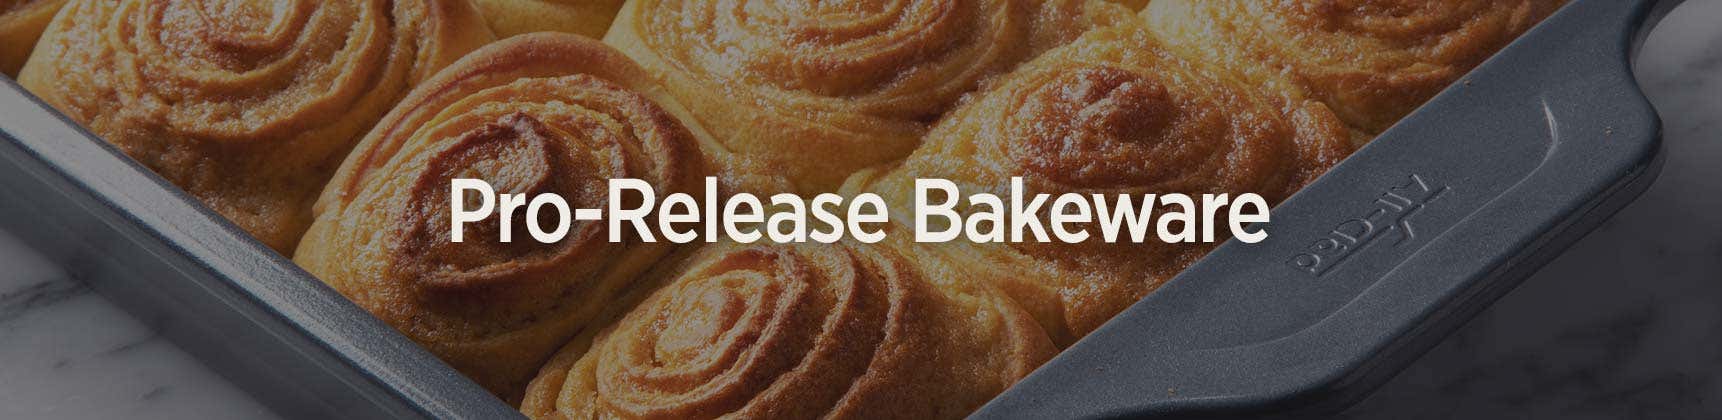 Pro-Release Bakeware